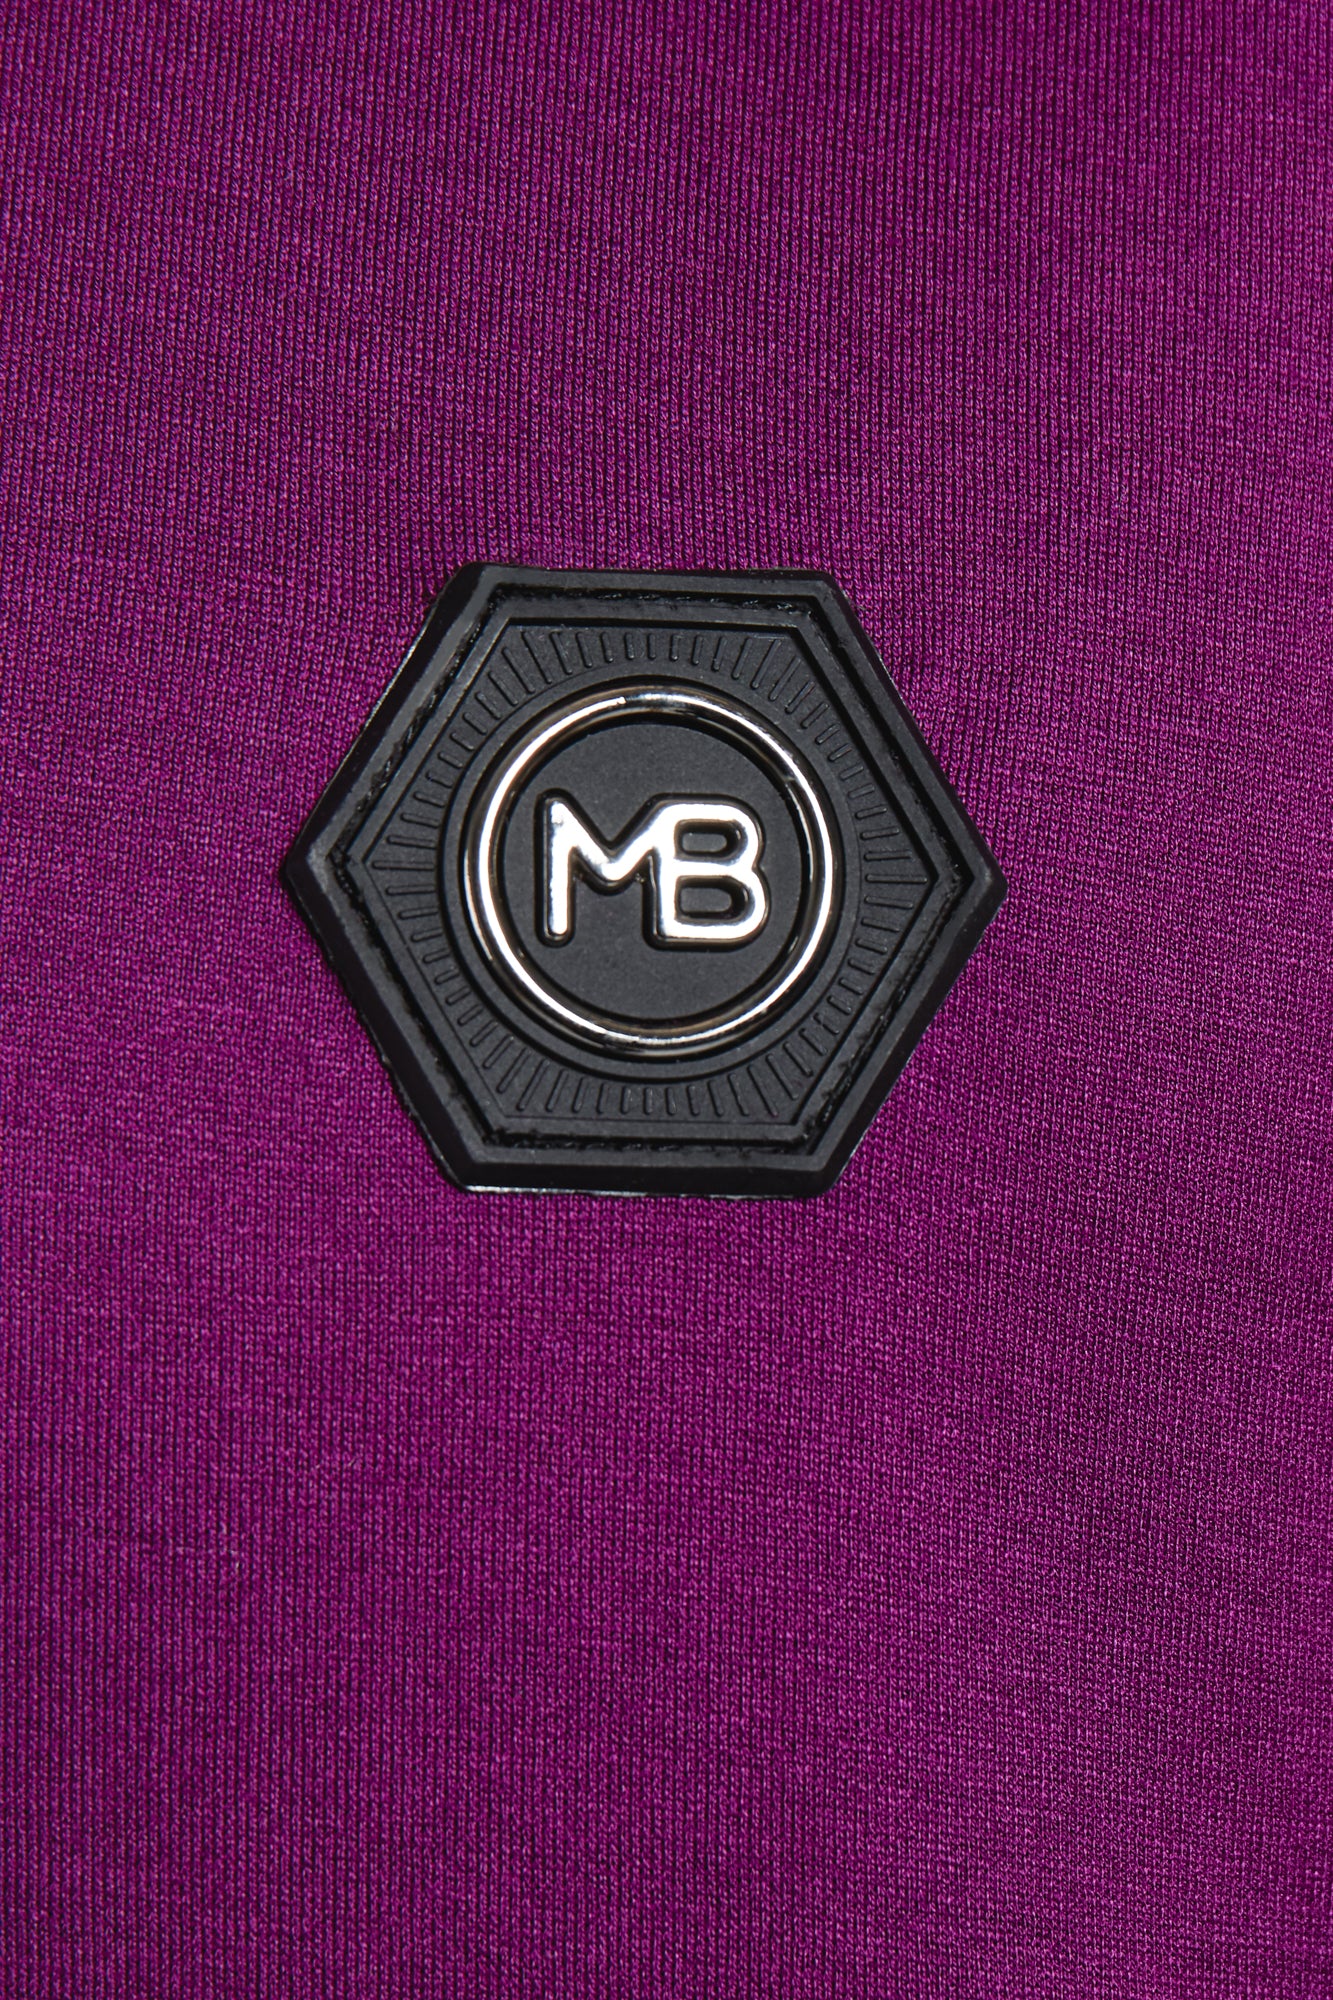 MB Chest Badge Shirt Burgundy